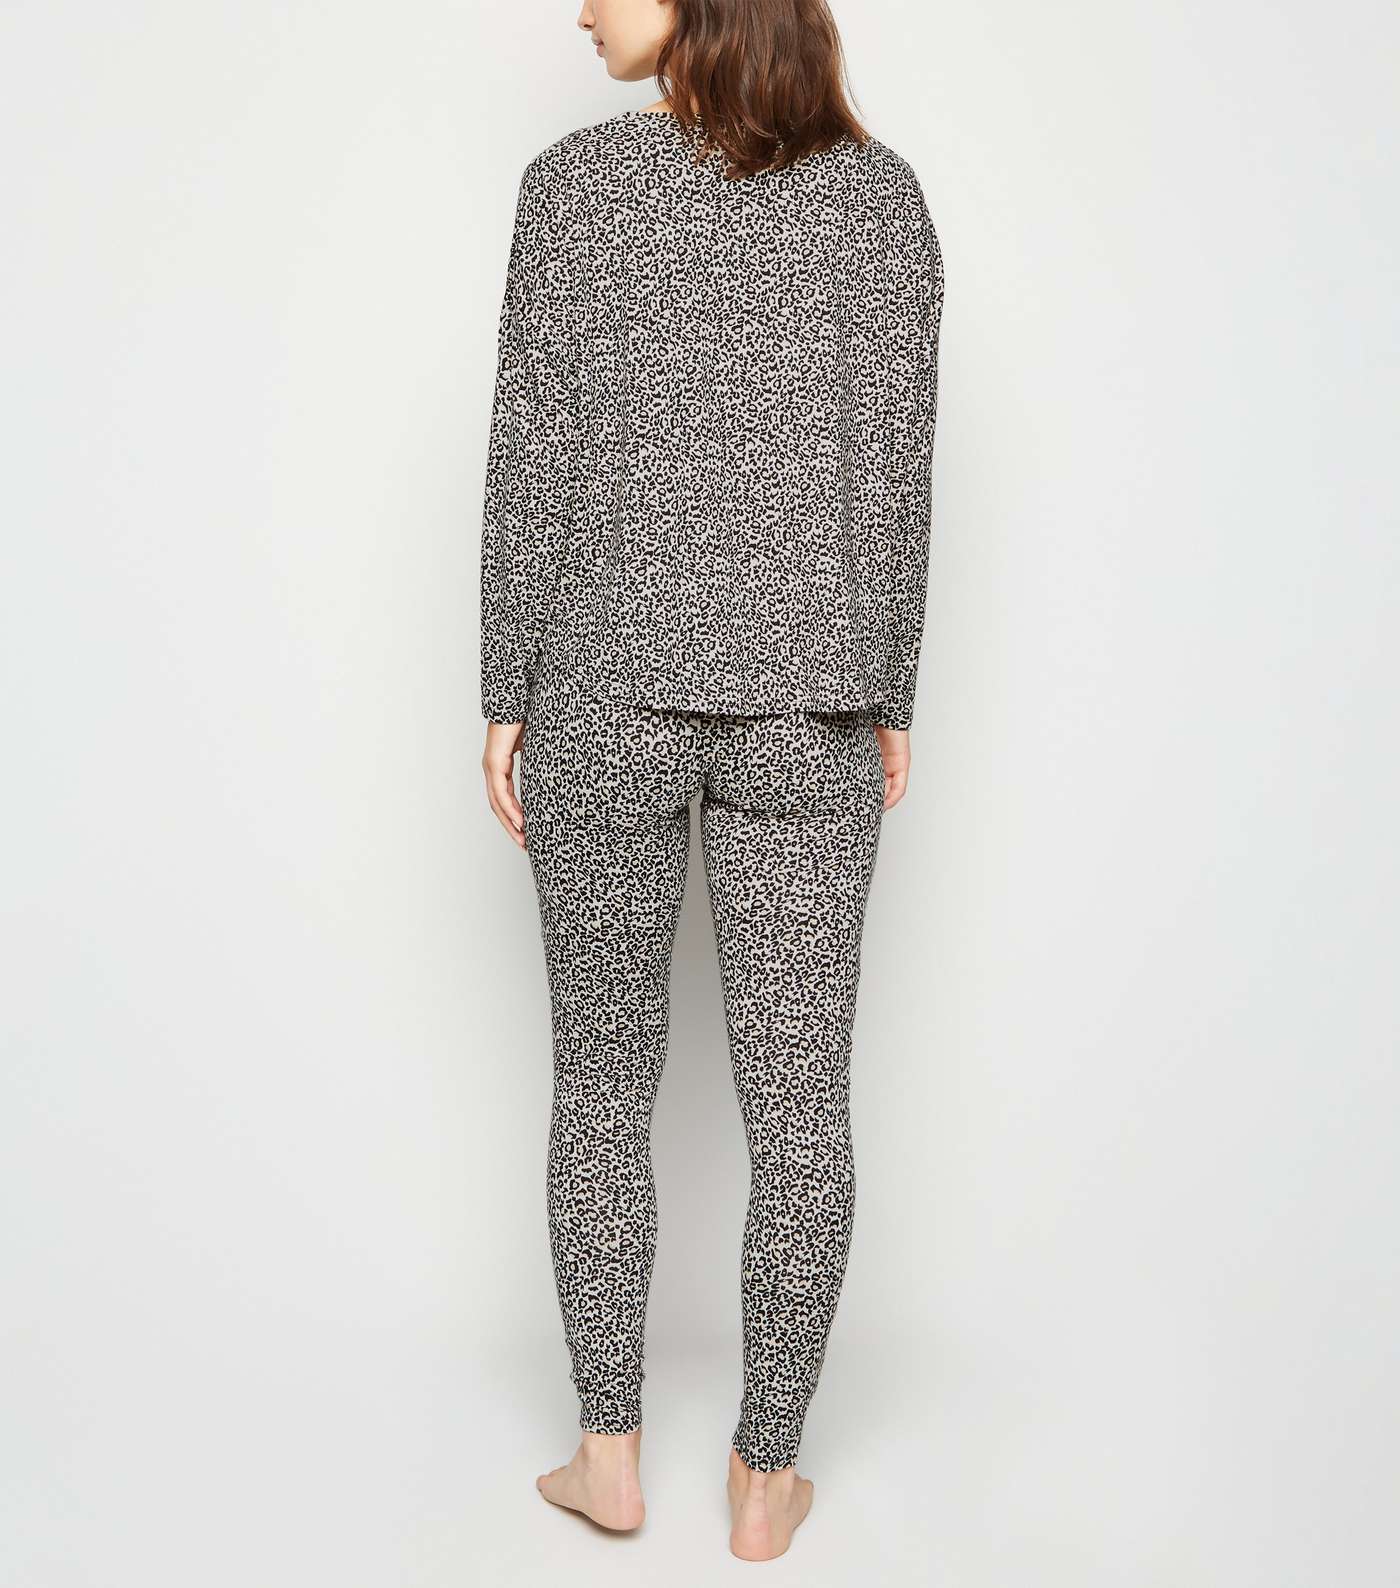 Off White Leopard Print Soft Touch Pyjama Set Image 2